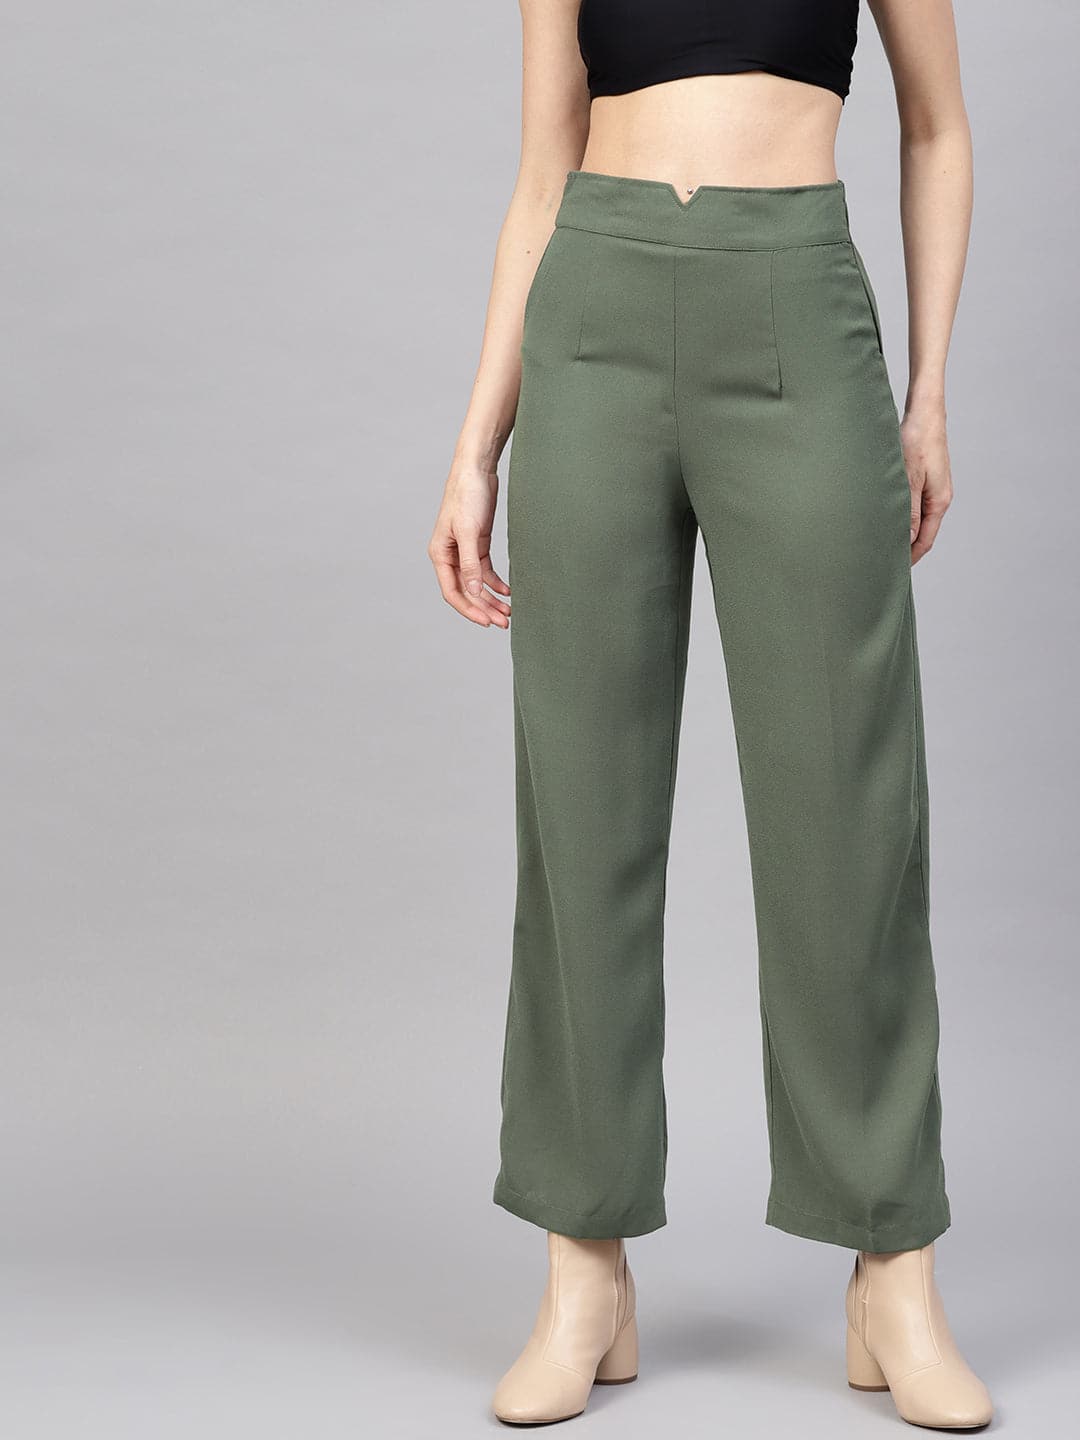 Olive Side Zipper Pant-Pants-SASSAFRAS